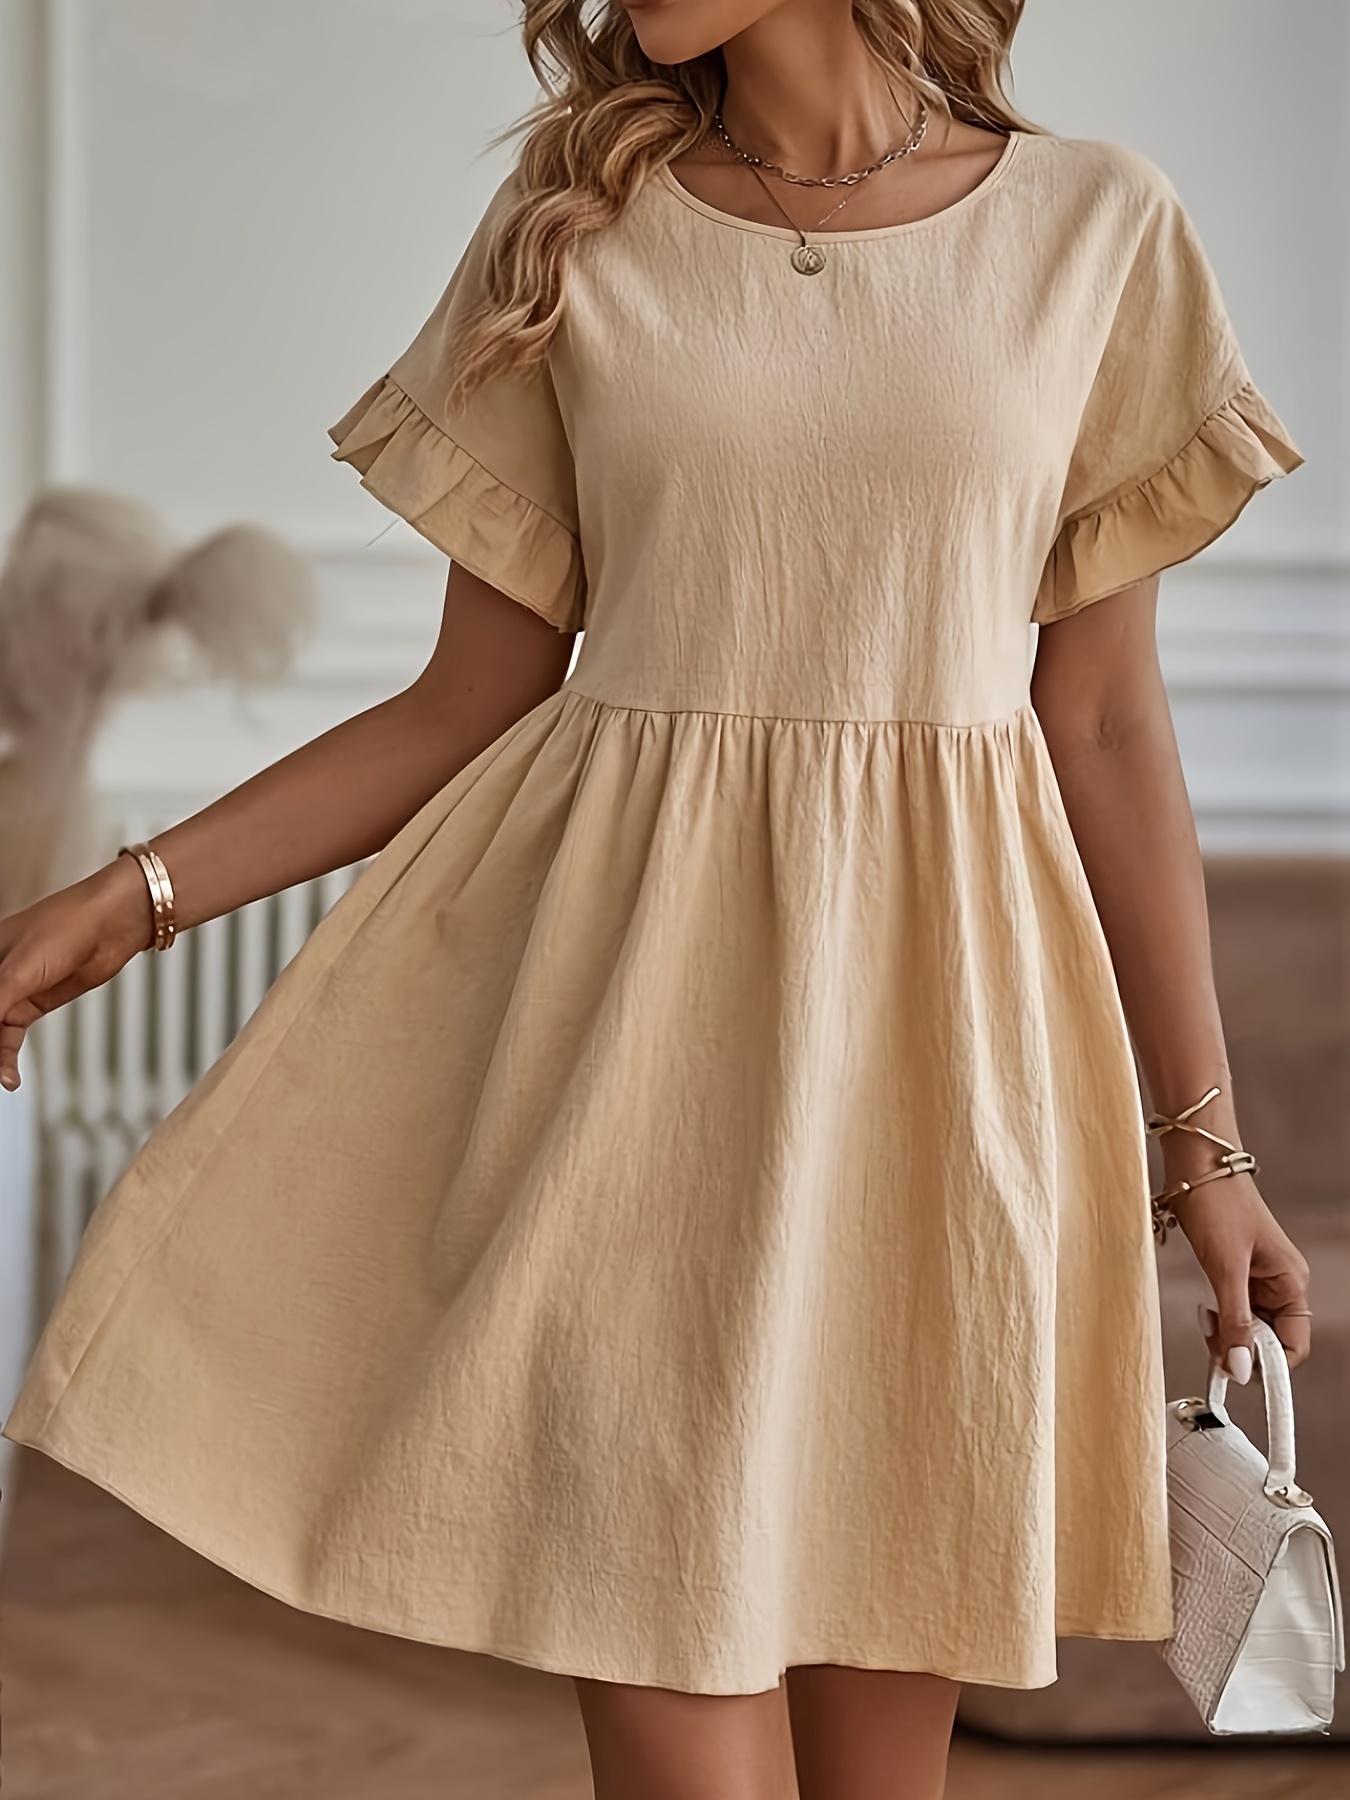 Women's Solid Colour Casual Short Sleeve Mid Length Cotton Linen